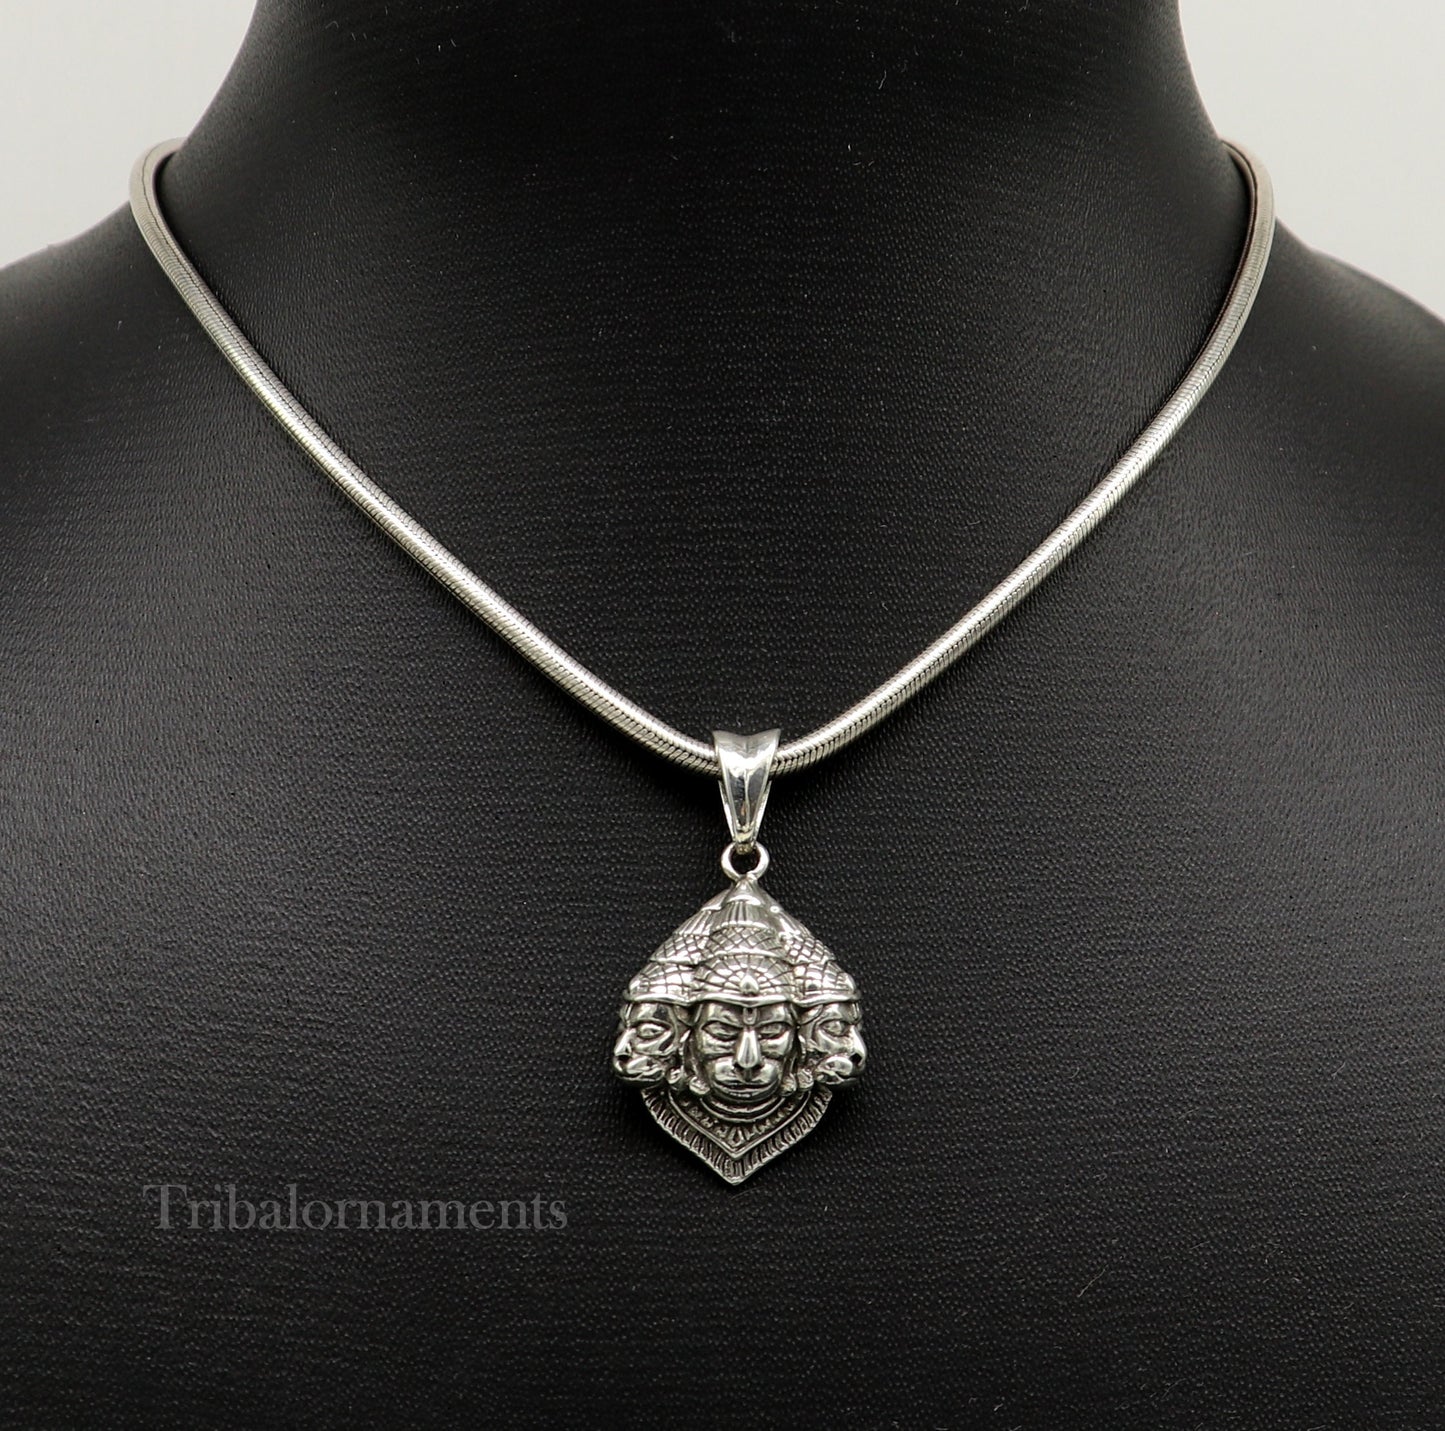 God hanuman pendant 92.5 sterling silver handmade god idol teen mukhi or three face hanuman pendant, amazing pendant gifting jewelry ssp994 - TRIBAL ORNAMENTS